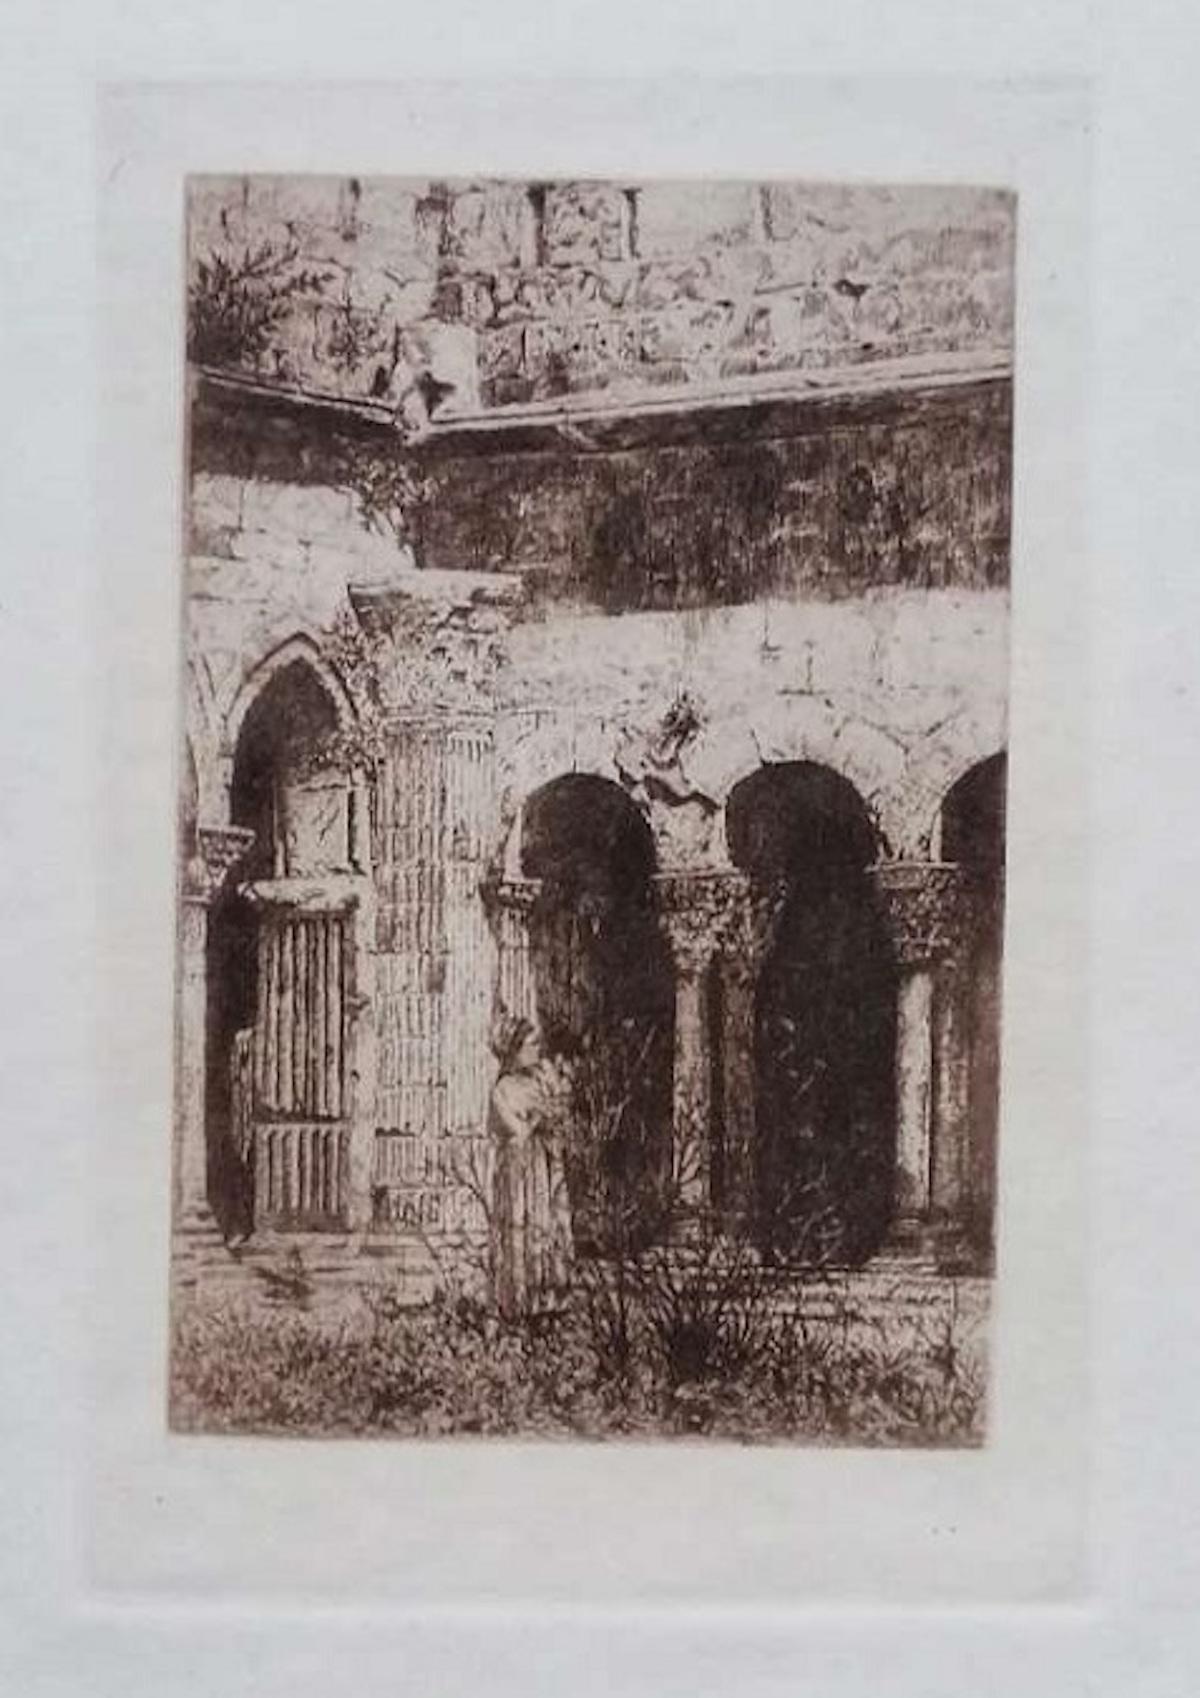 Luca Beltrami Landscape Print - St-Trophime Cloister - Original Etching on Cardboard by L. Beltrami - 1877